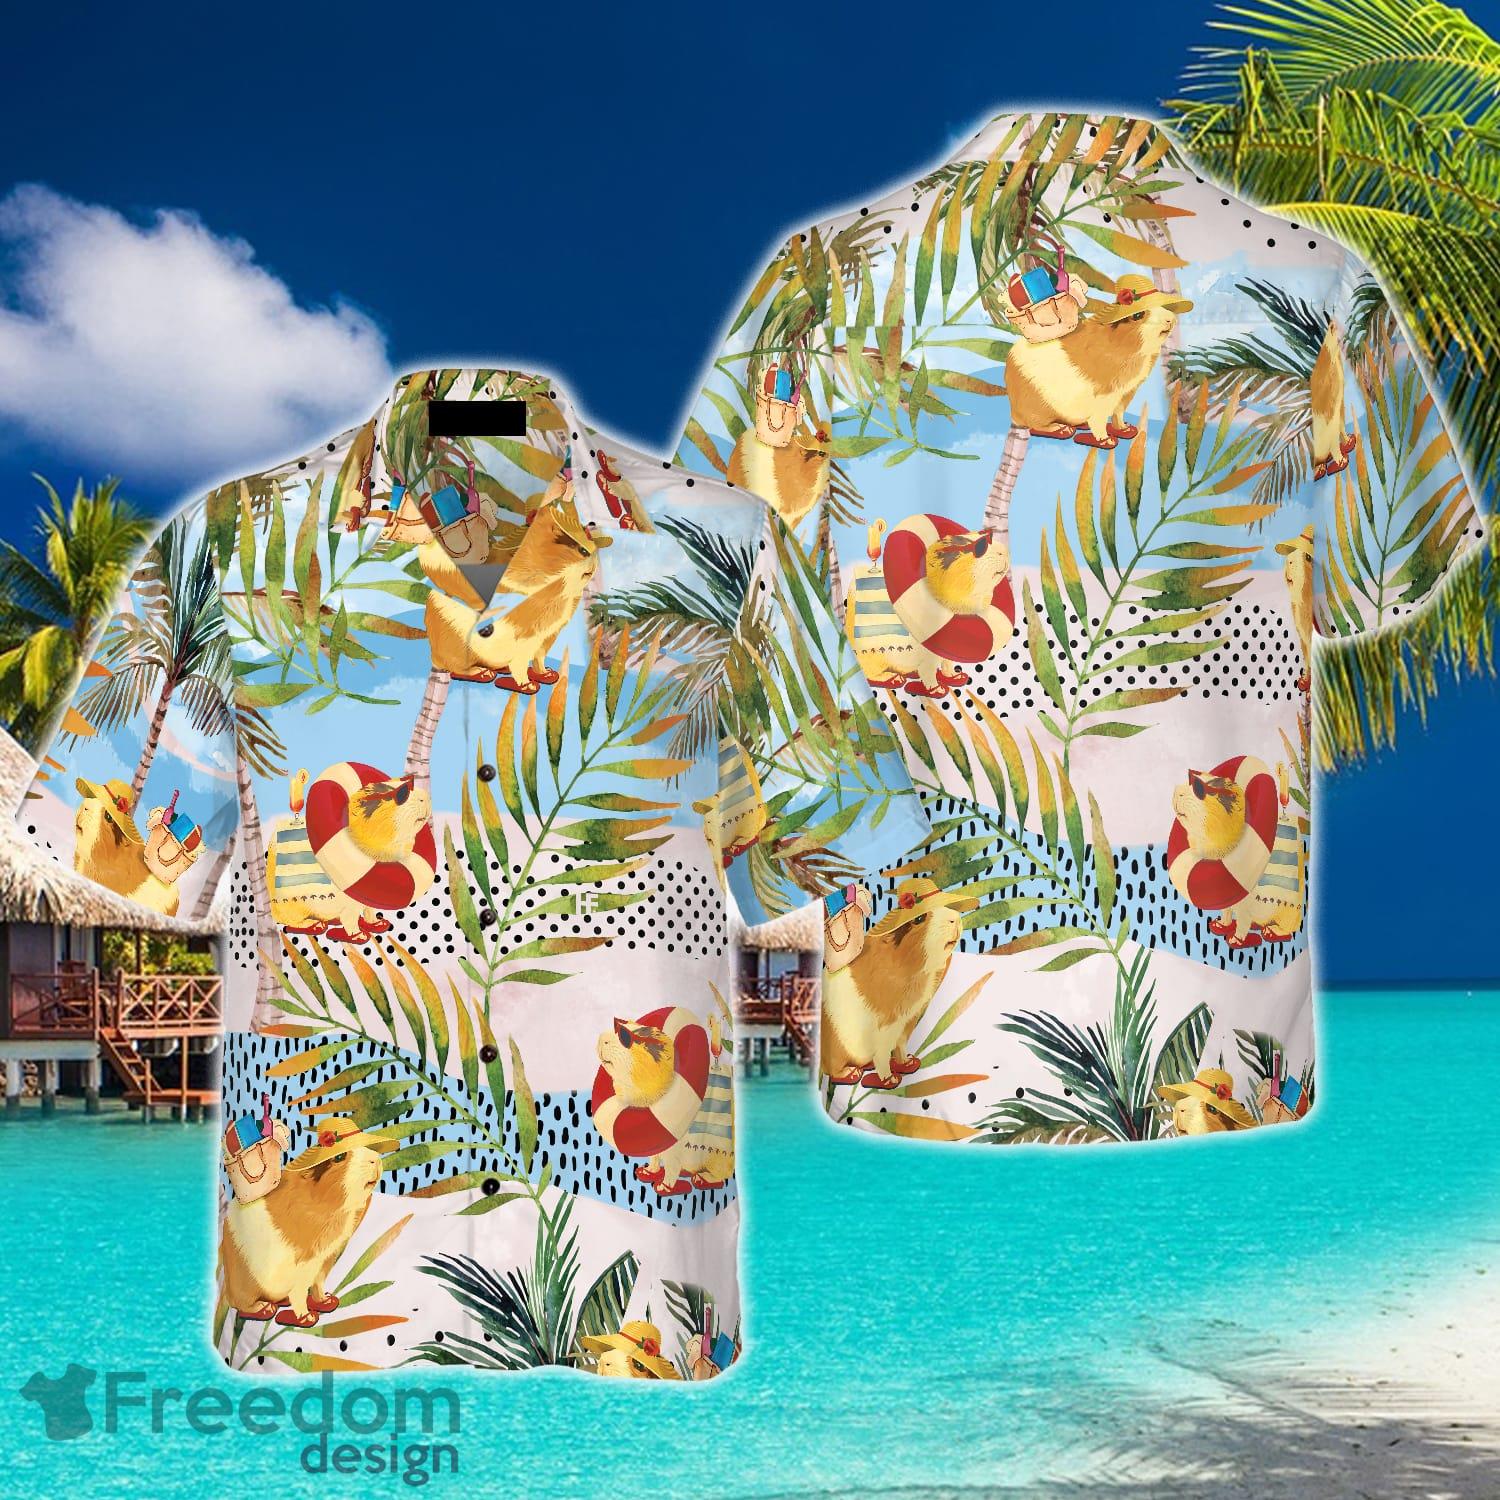 Chicago White Sox MLB Hawaiian Shirt Sun-Kissed Aloha Shirt